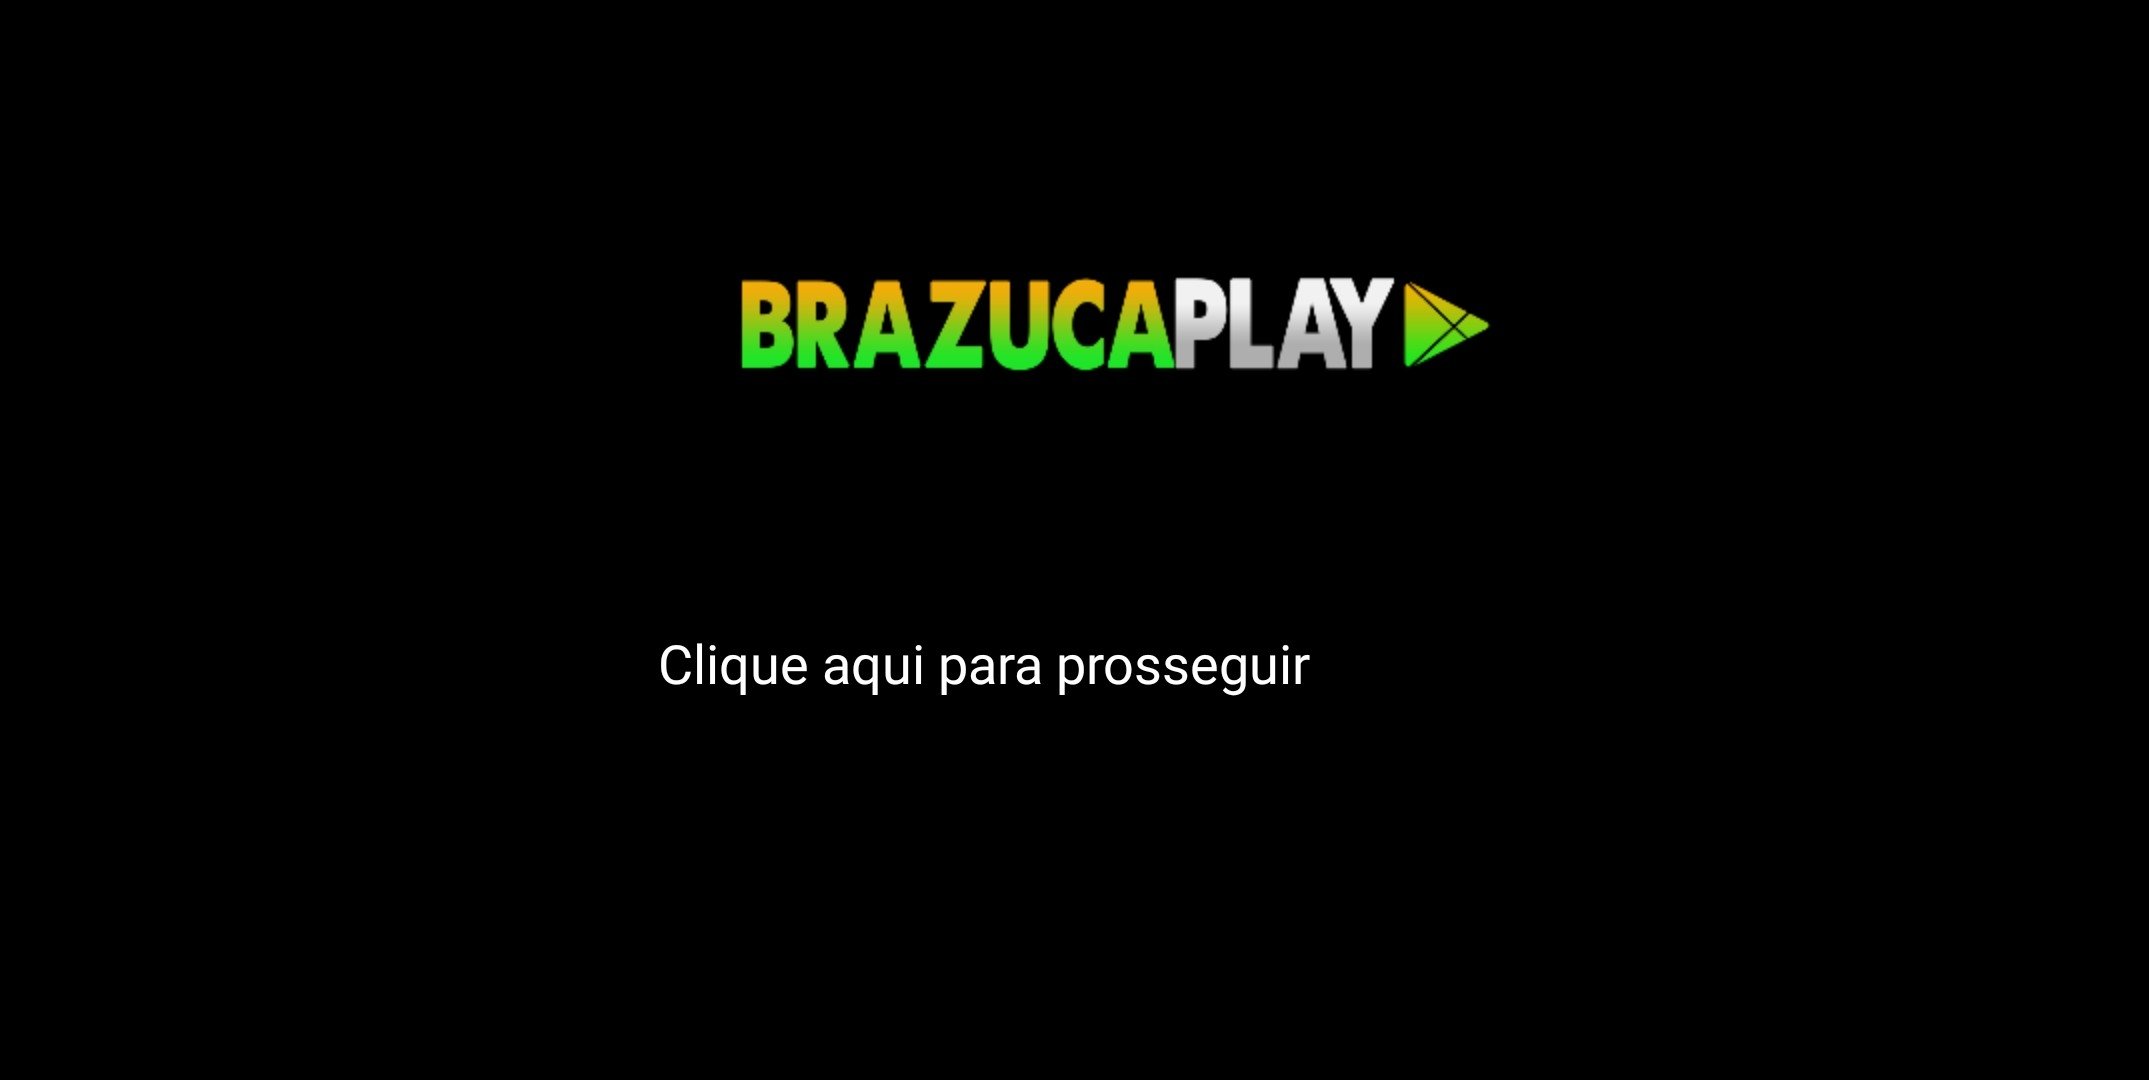 brazuca play addon 2020